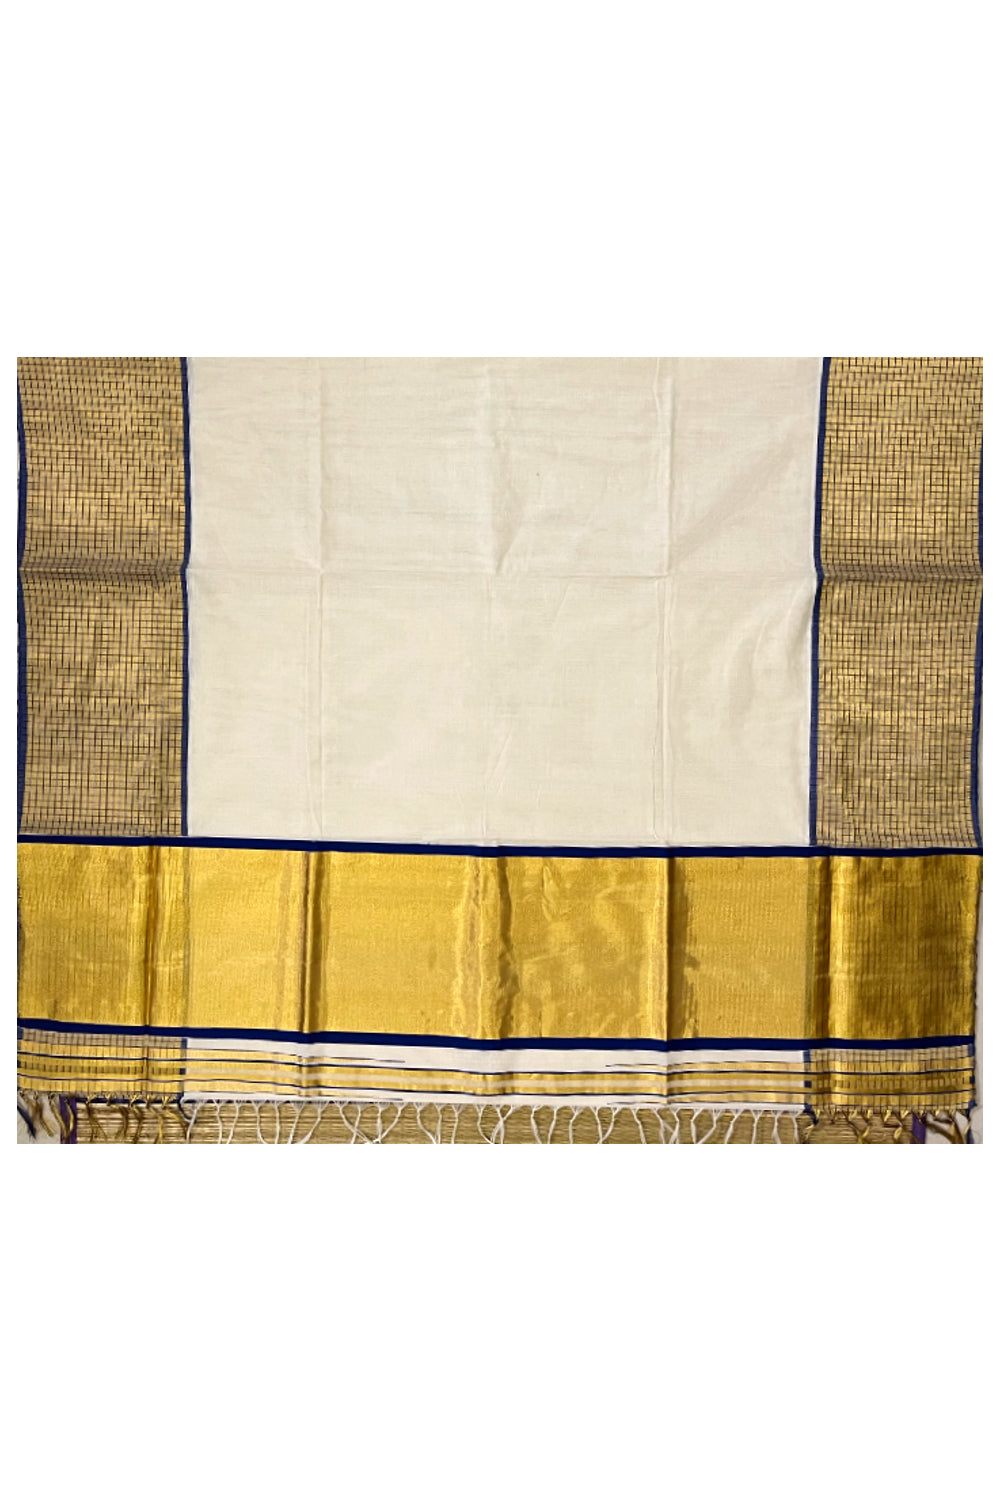 Southloom Handloom Premium Cotton Saree with Blue and Kasavu Check Design Border